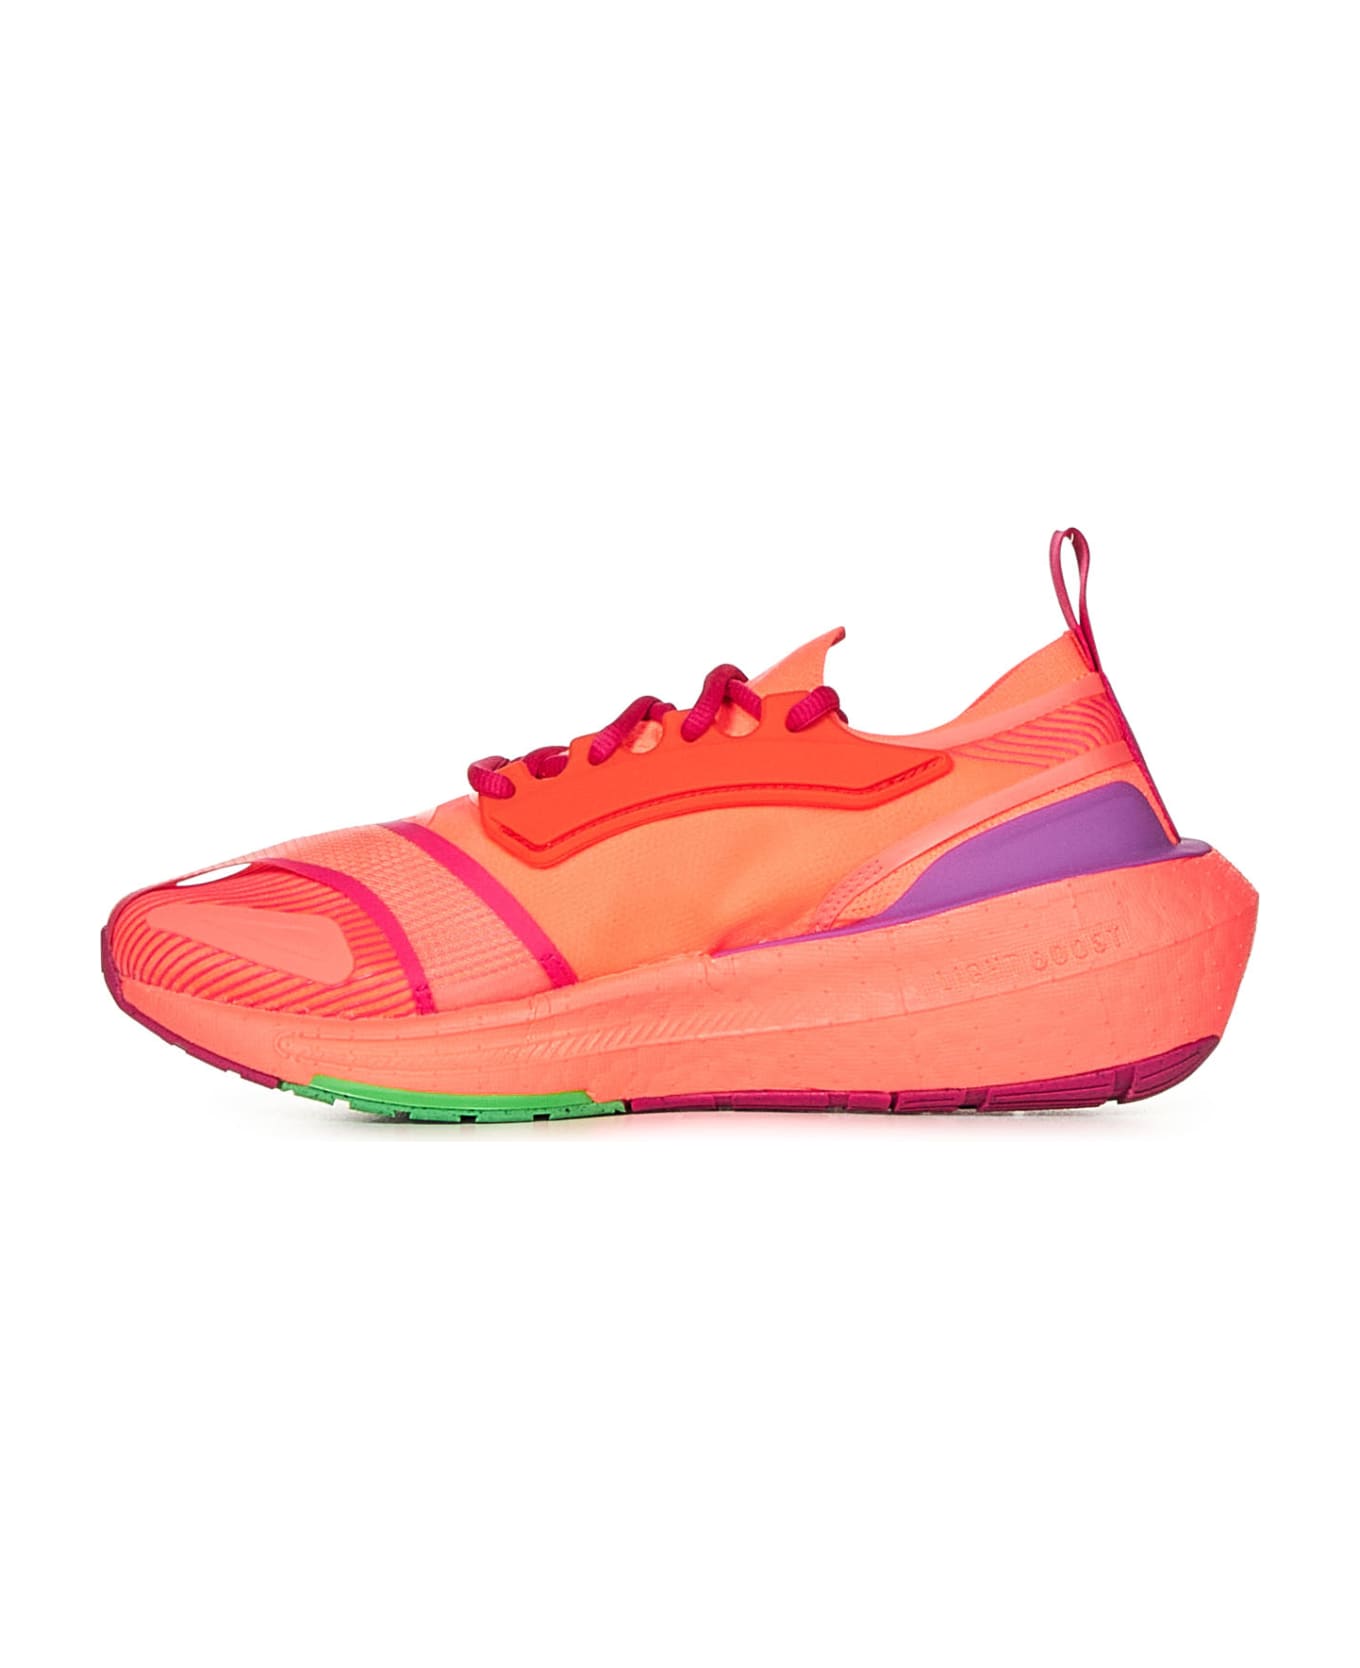 Adidas by Stella McCartney Ultraboost Light Sneakers - Orange スニーカー